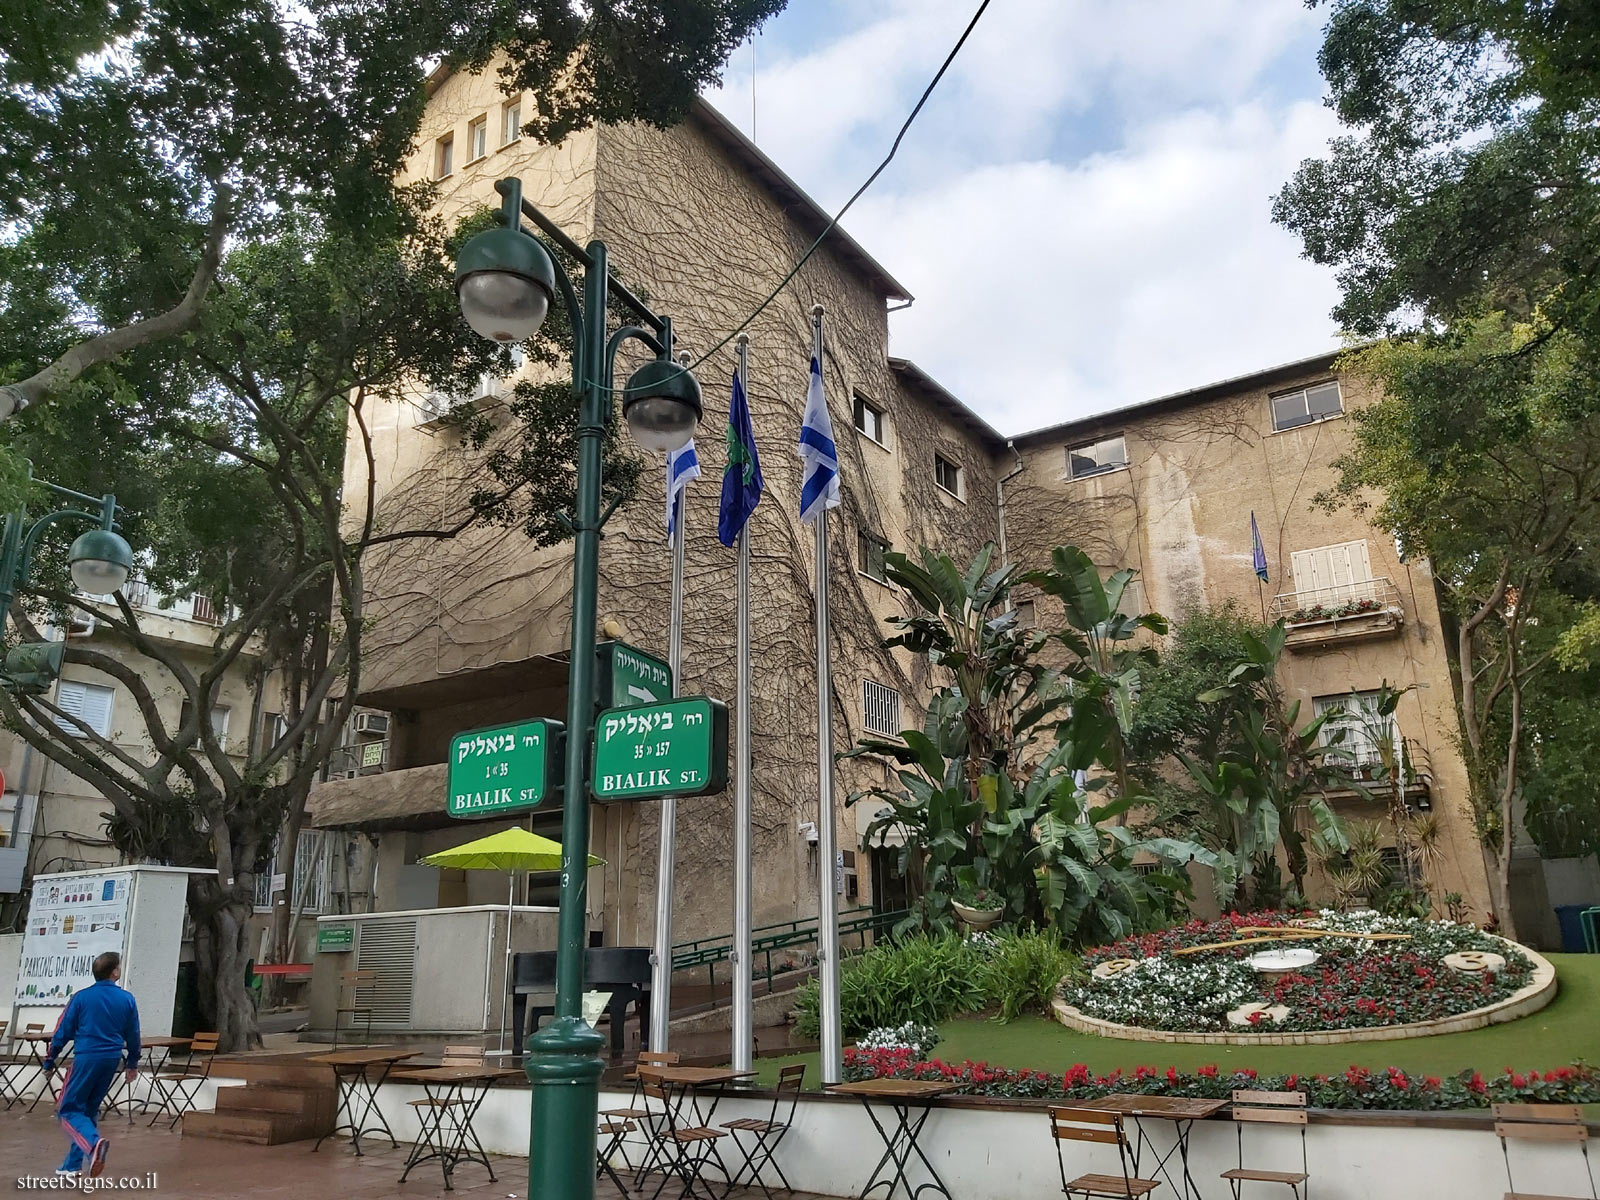 City Hall - Ramat Gan Municipality / Bialik, Ramat Gan, Israel